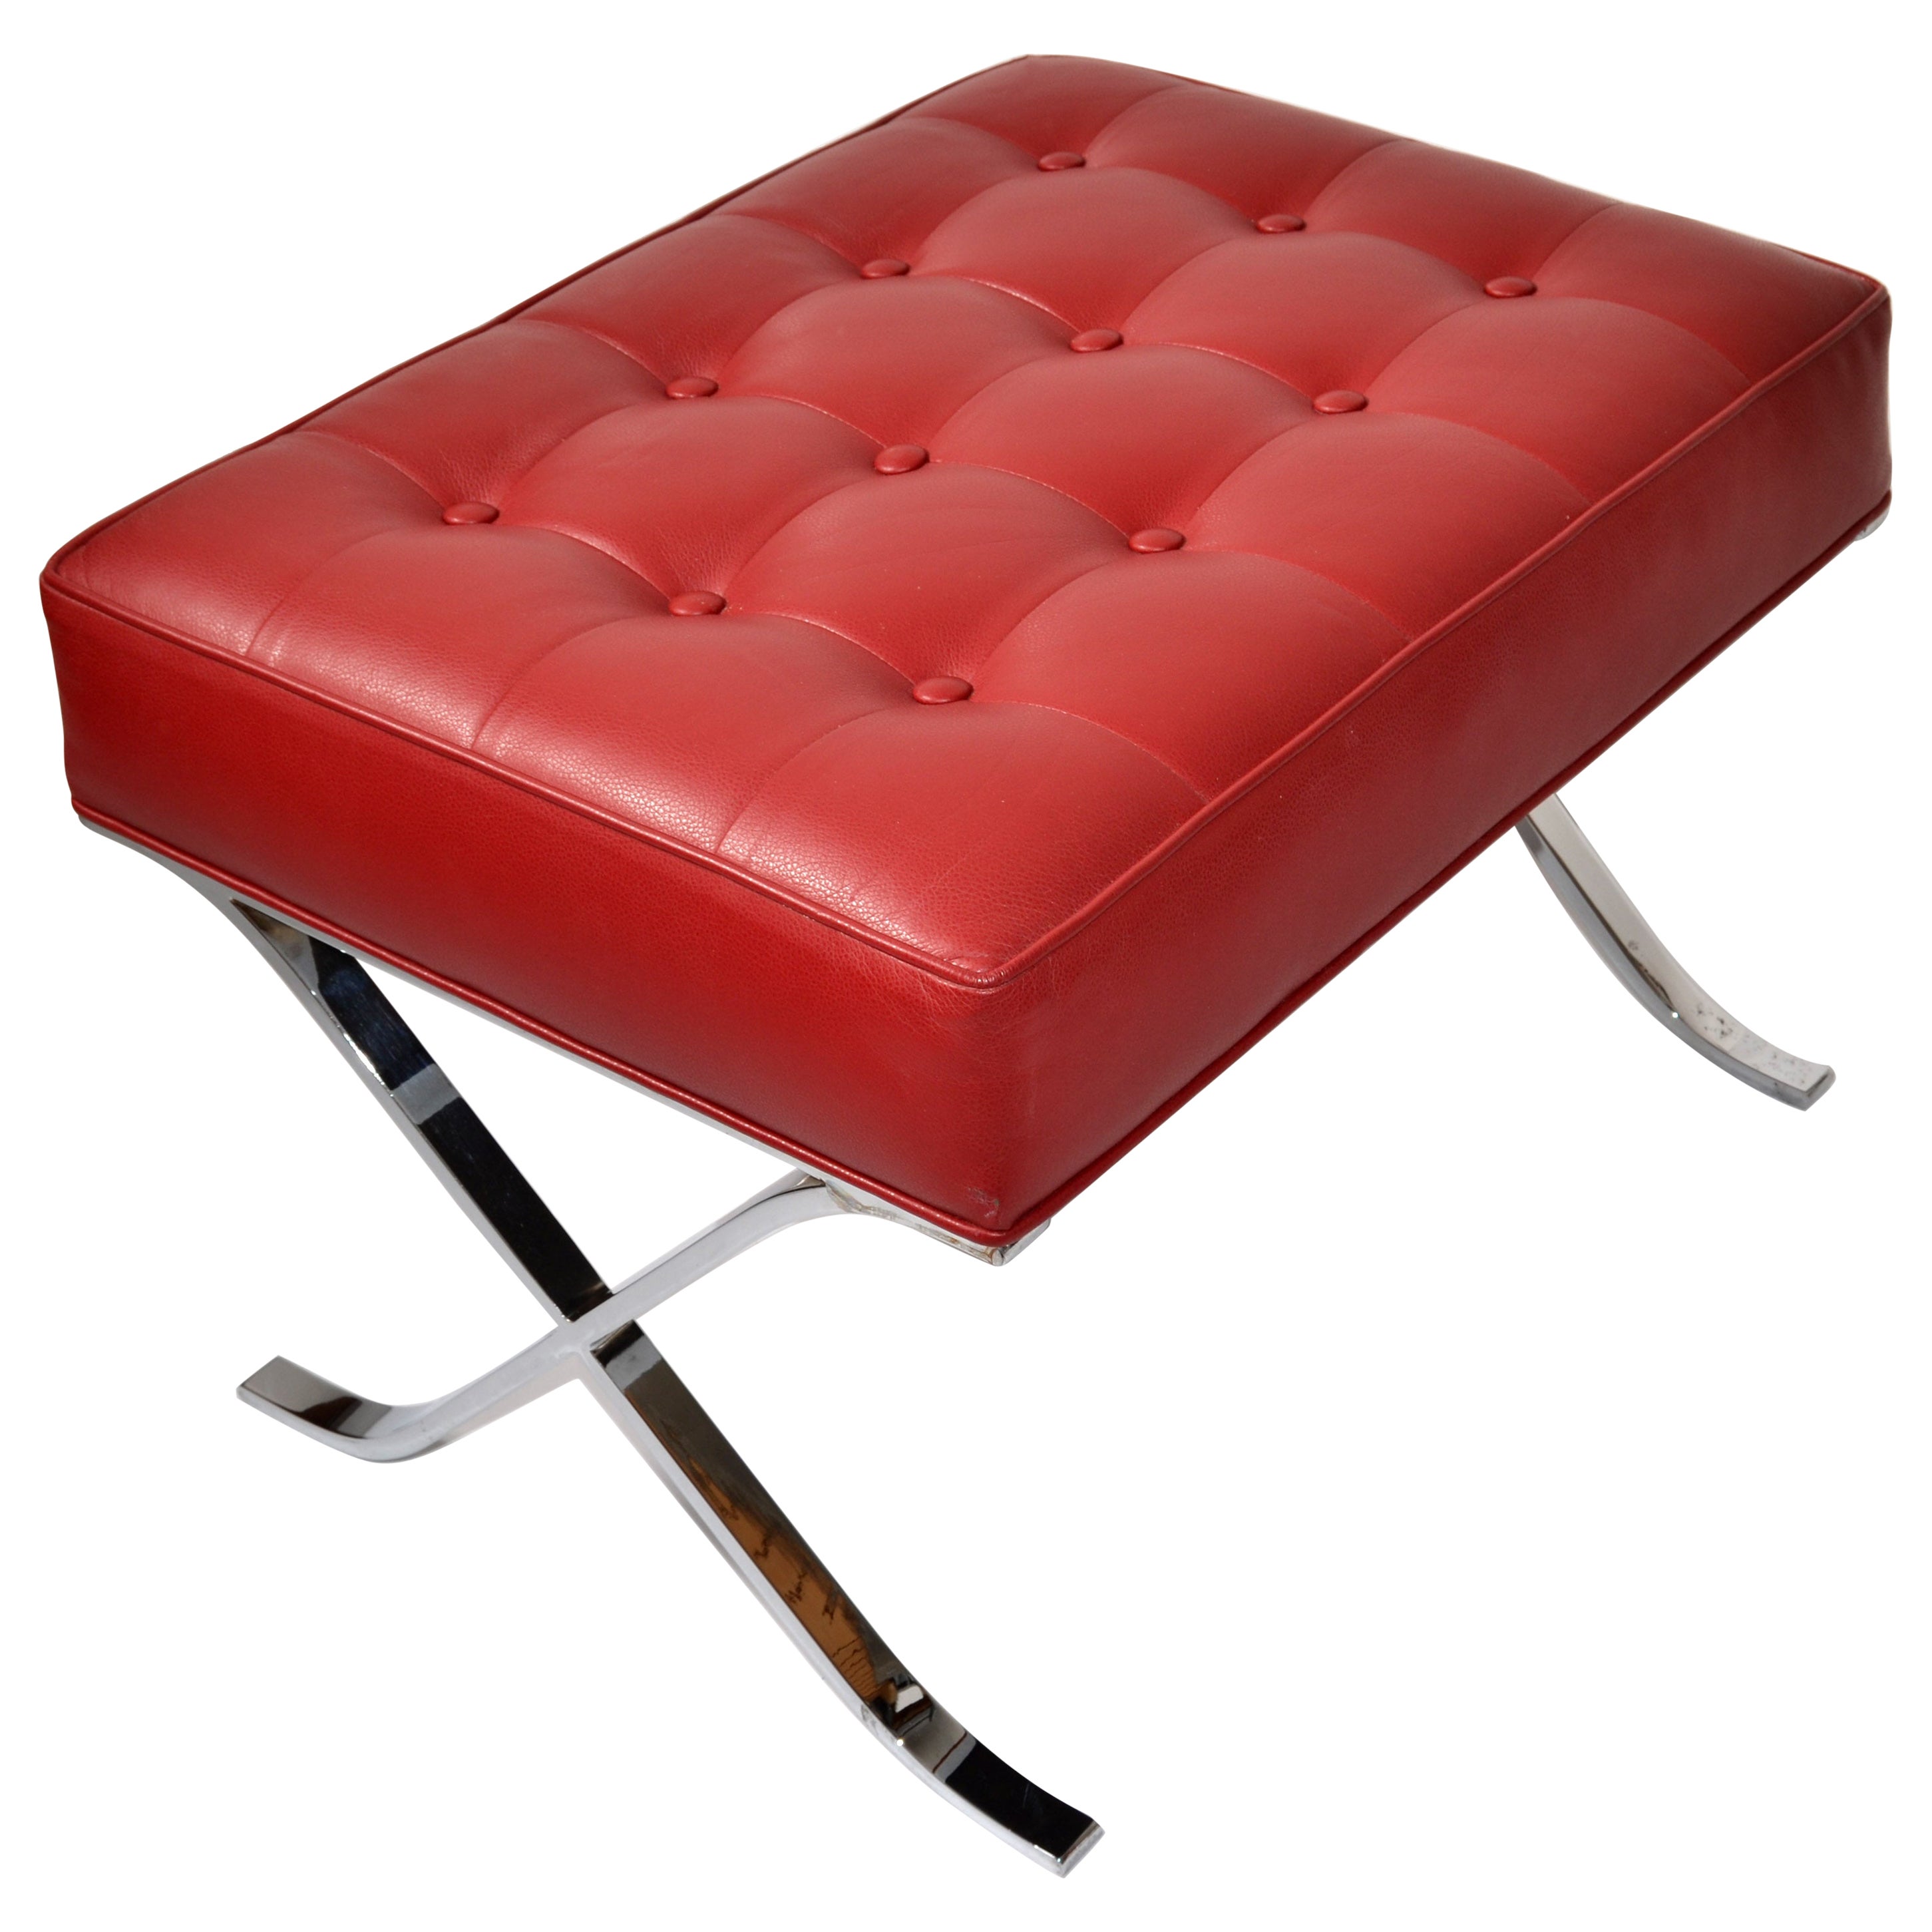 Mies Van Der Rohe Style Barcelona Chromed Steel Red Vinyl Ottoman Footstool 1980